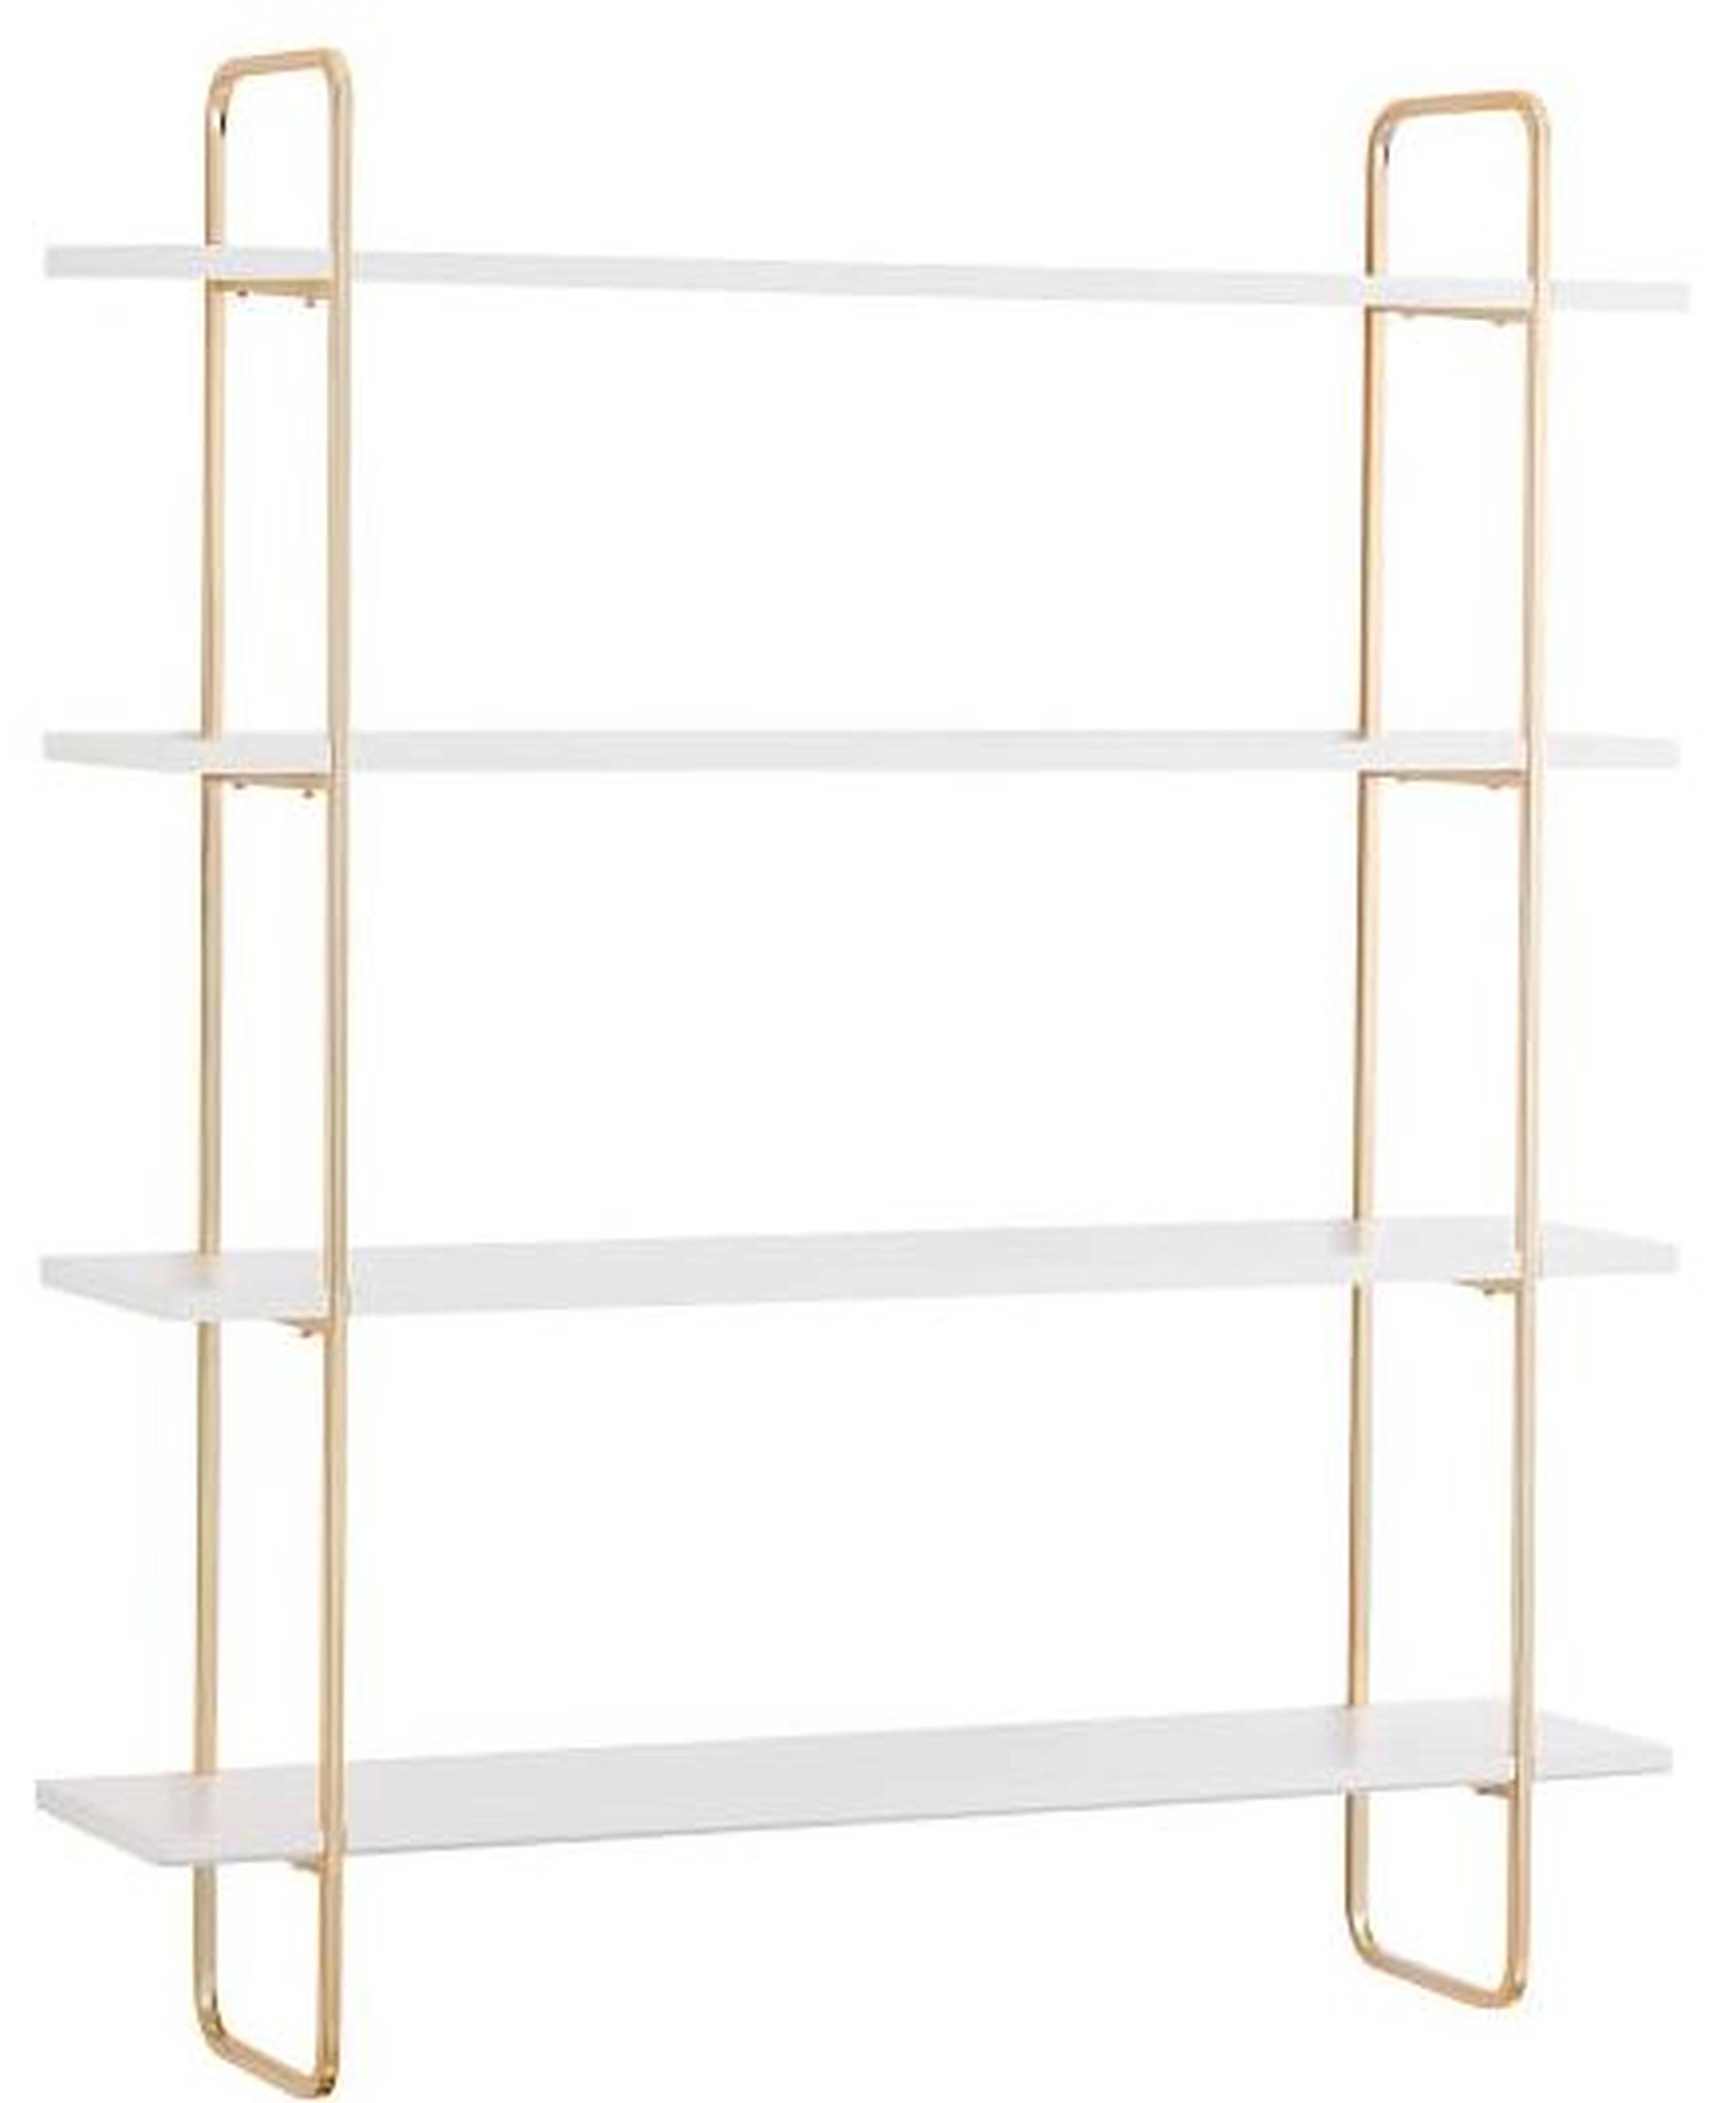 Metallic Trim Multi-level Wall Shelves, 4-Shelf, Gold/Whit - Pottery Barn Teen